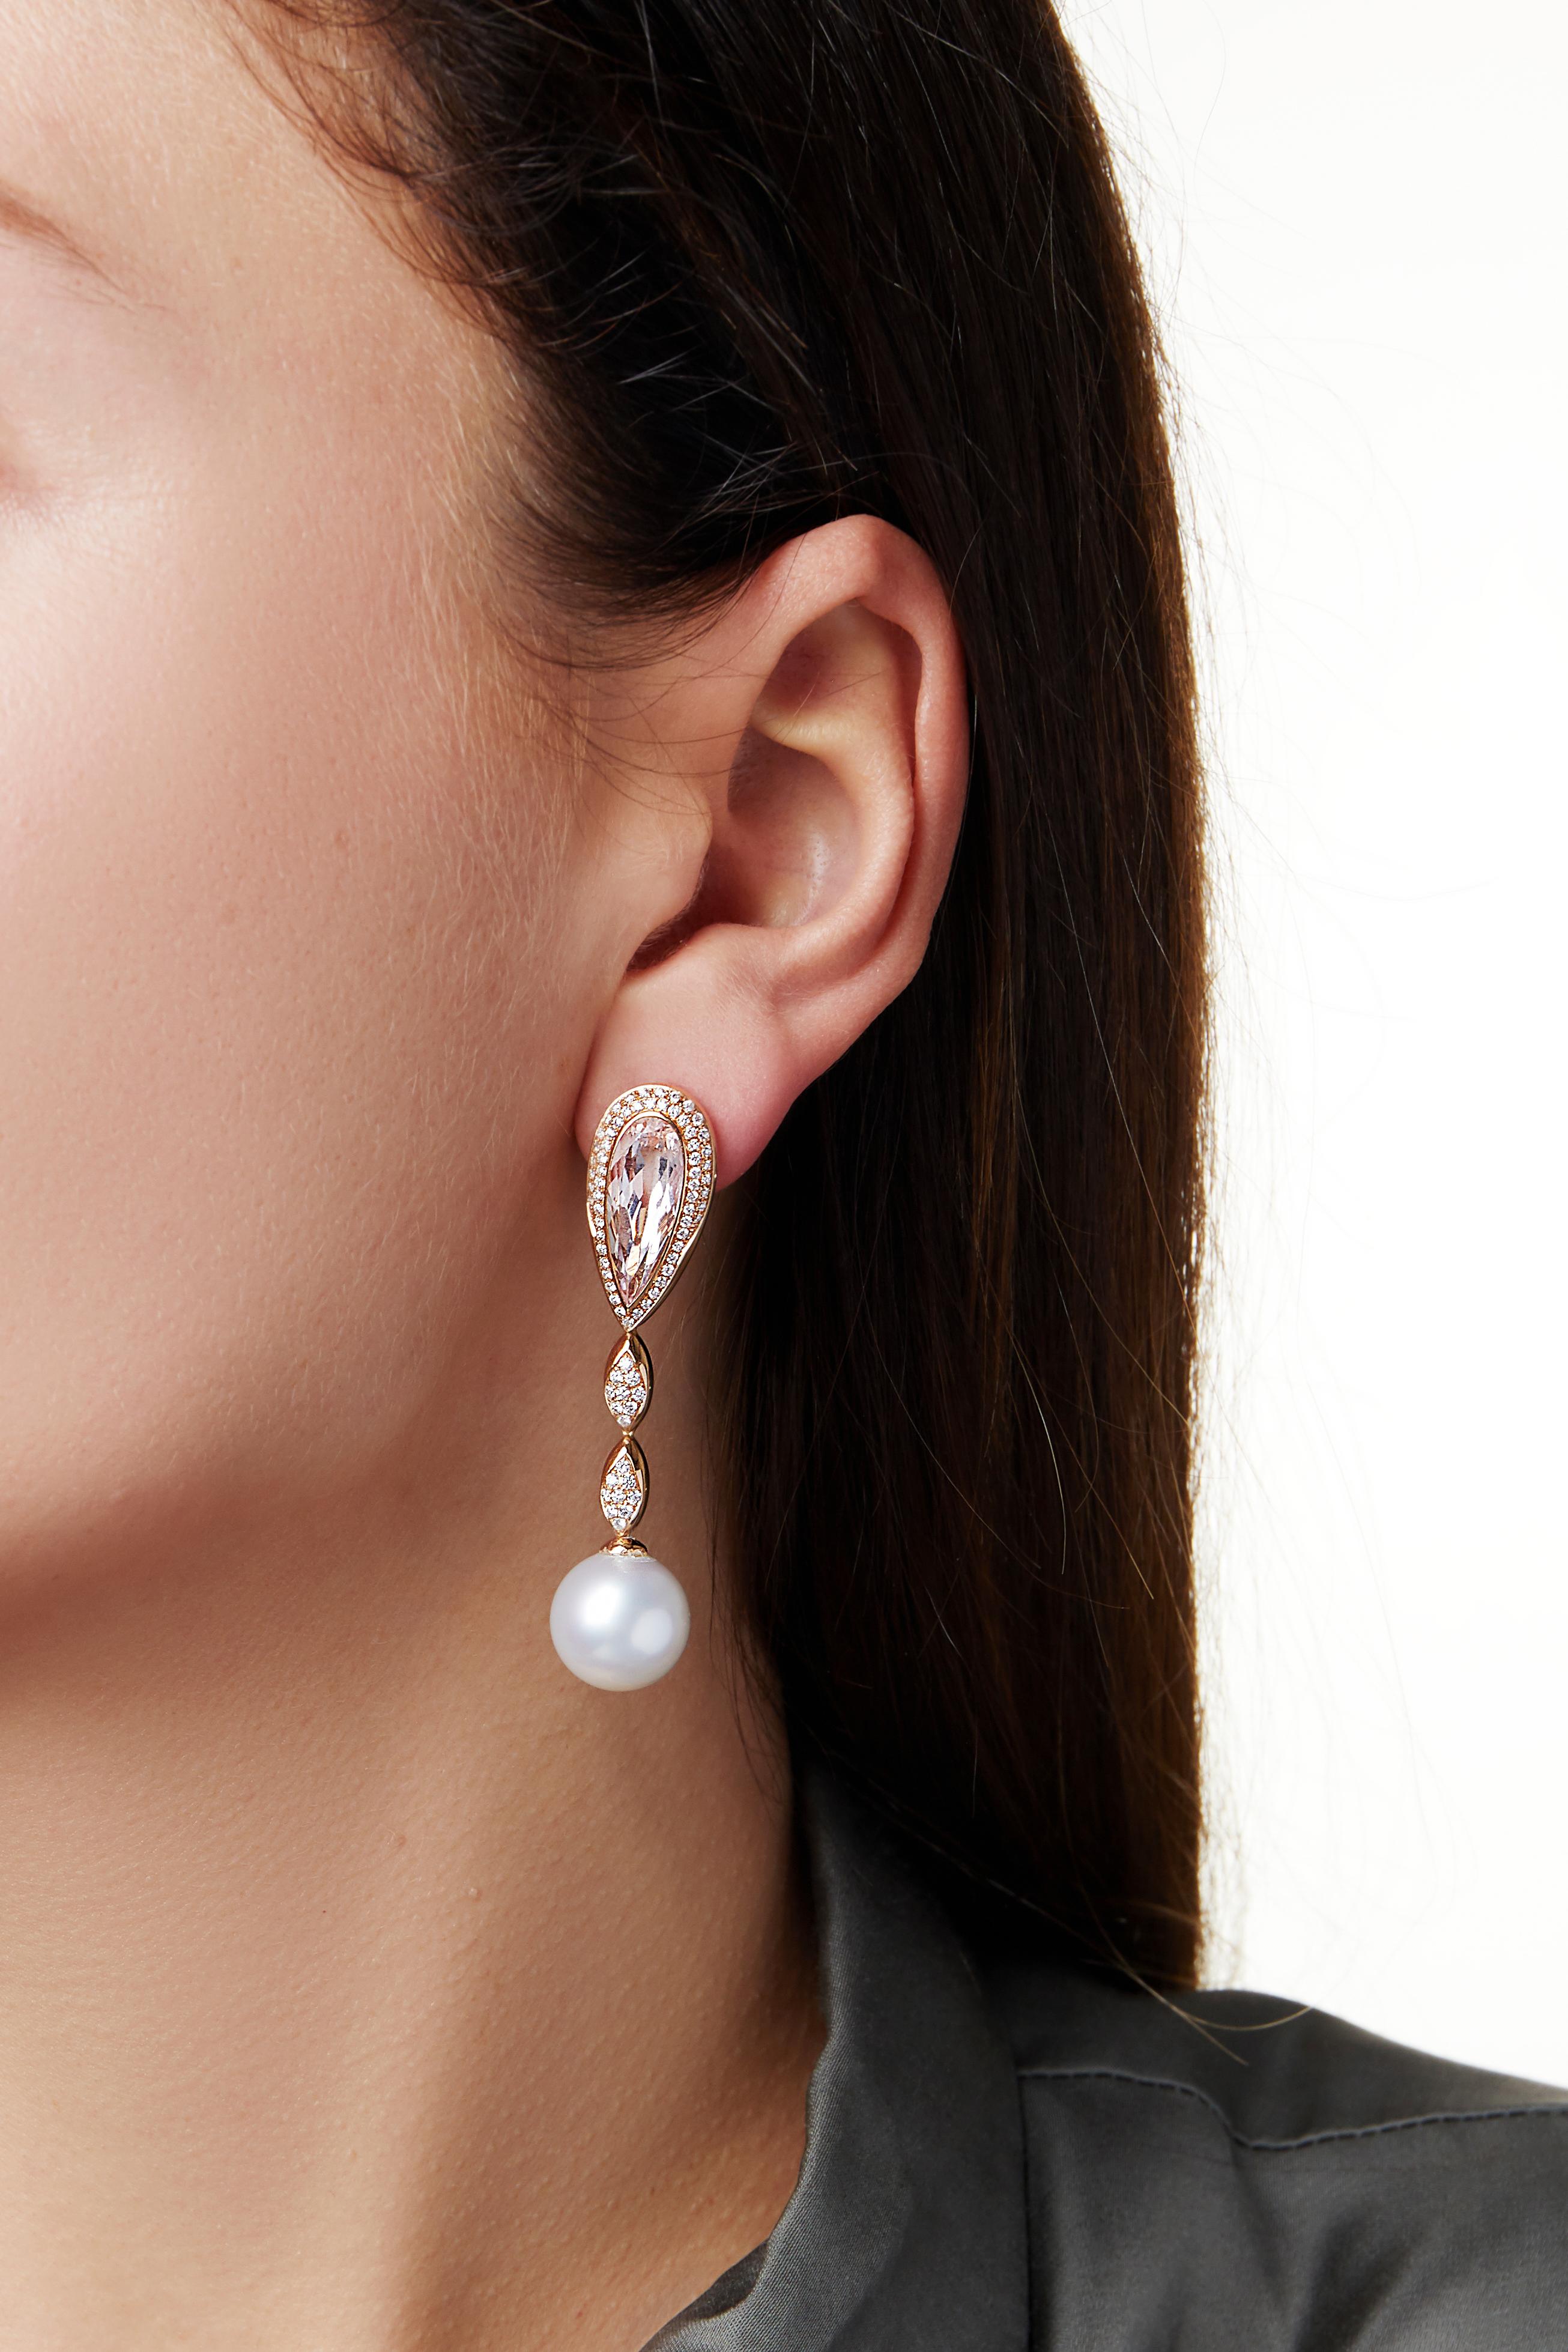 Modern Yoko London South Sea Pearl, Diamond and Morganite Earrings in 18K Rose Gold For Sale